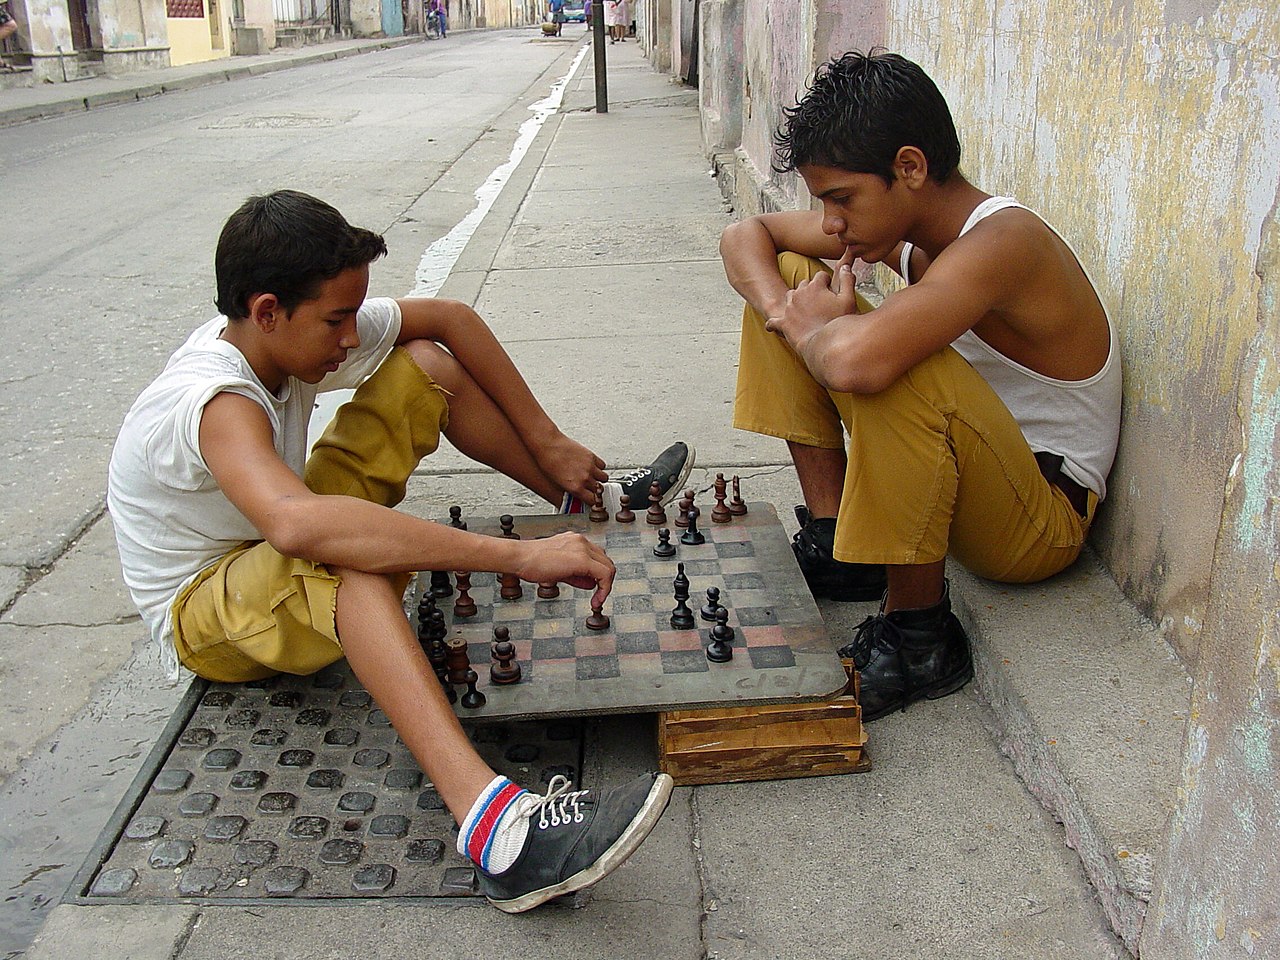 a brazilian teenage astronaut playing chess - Playground